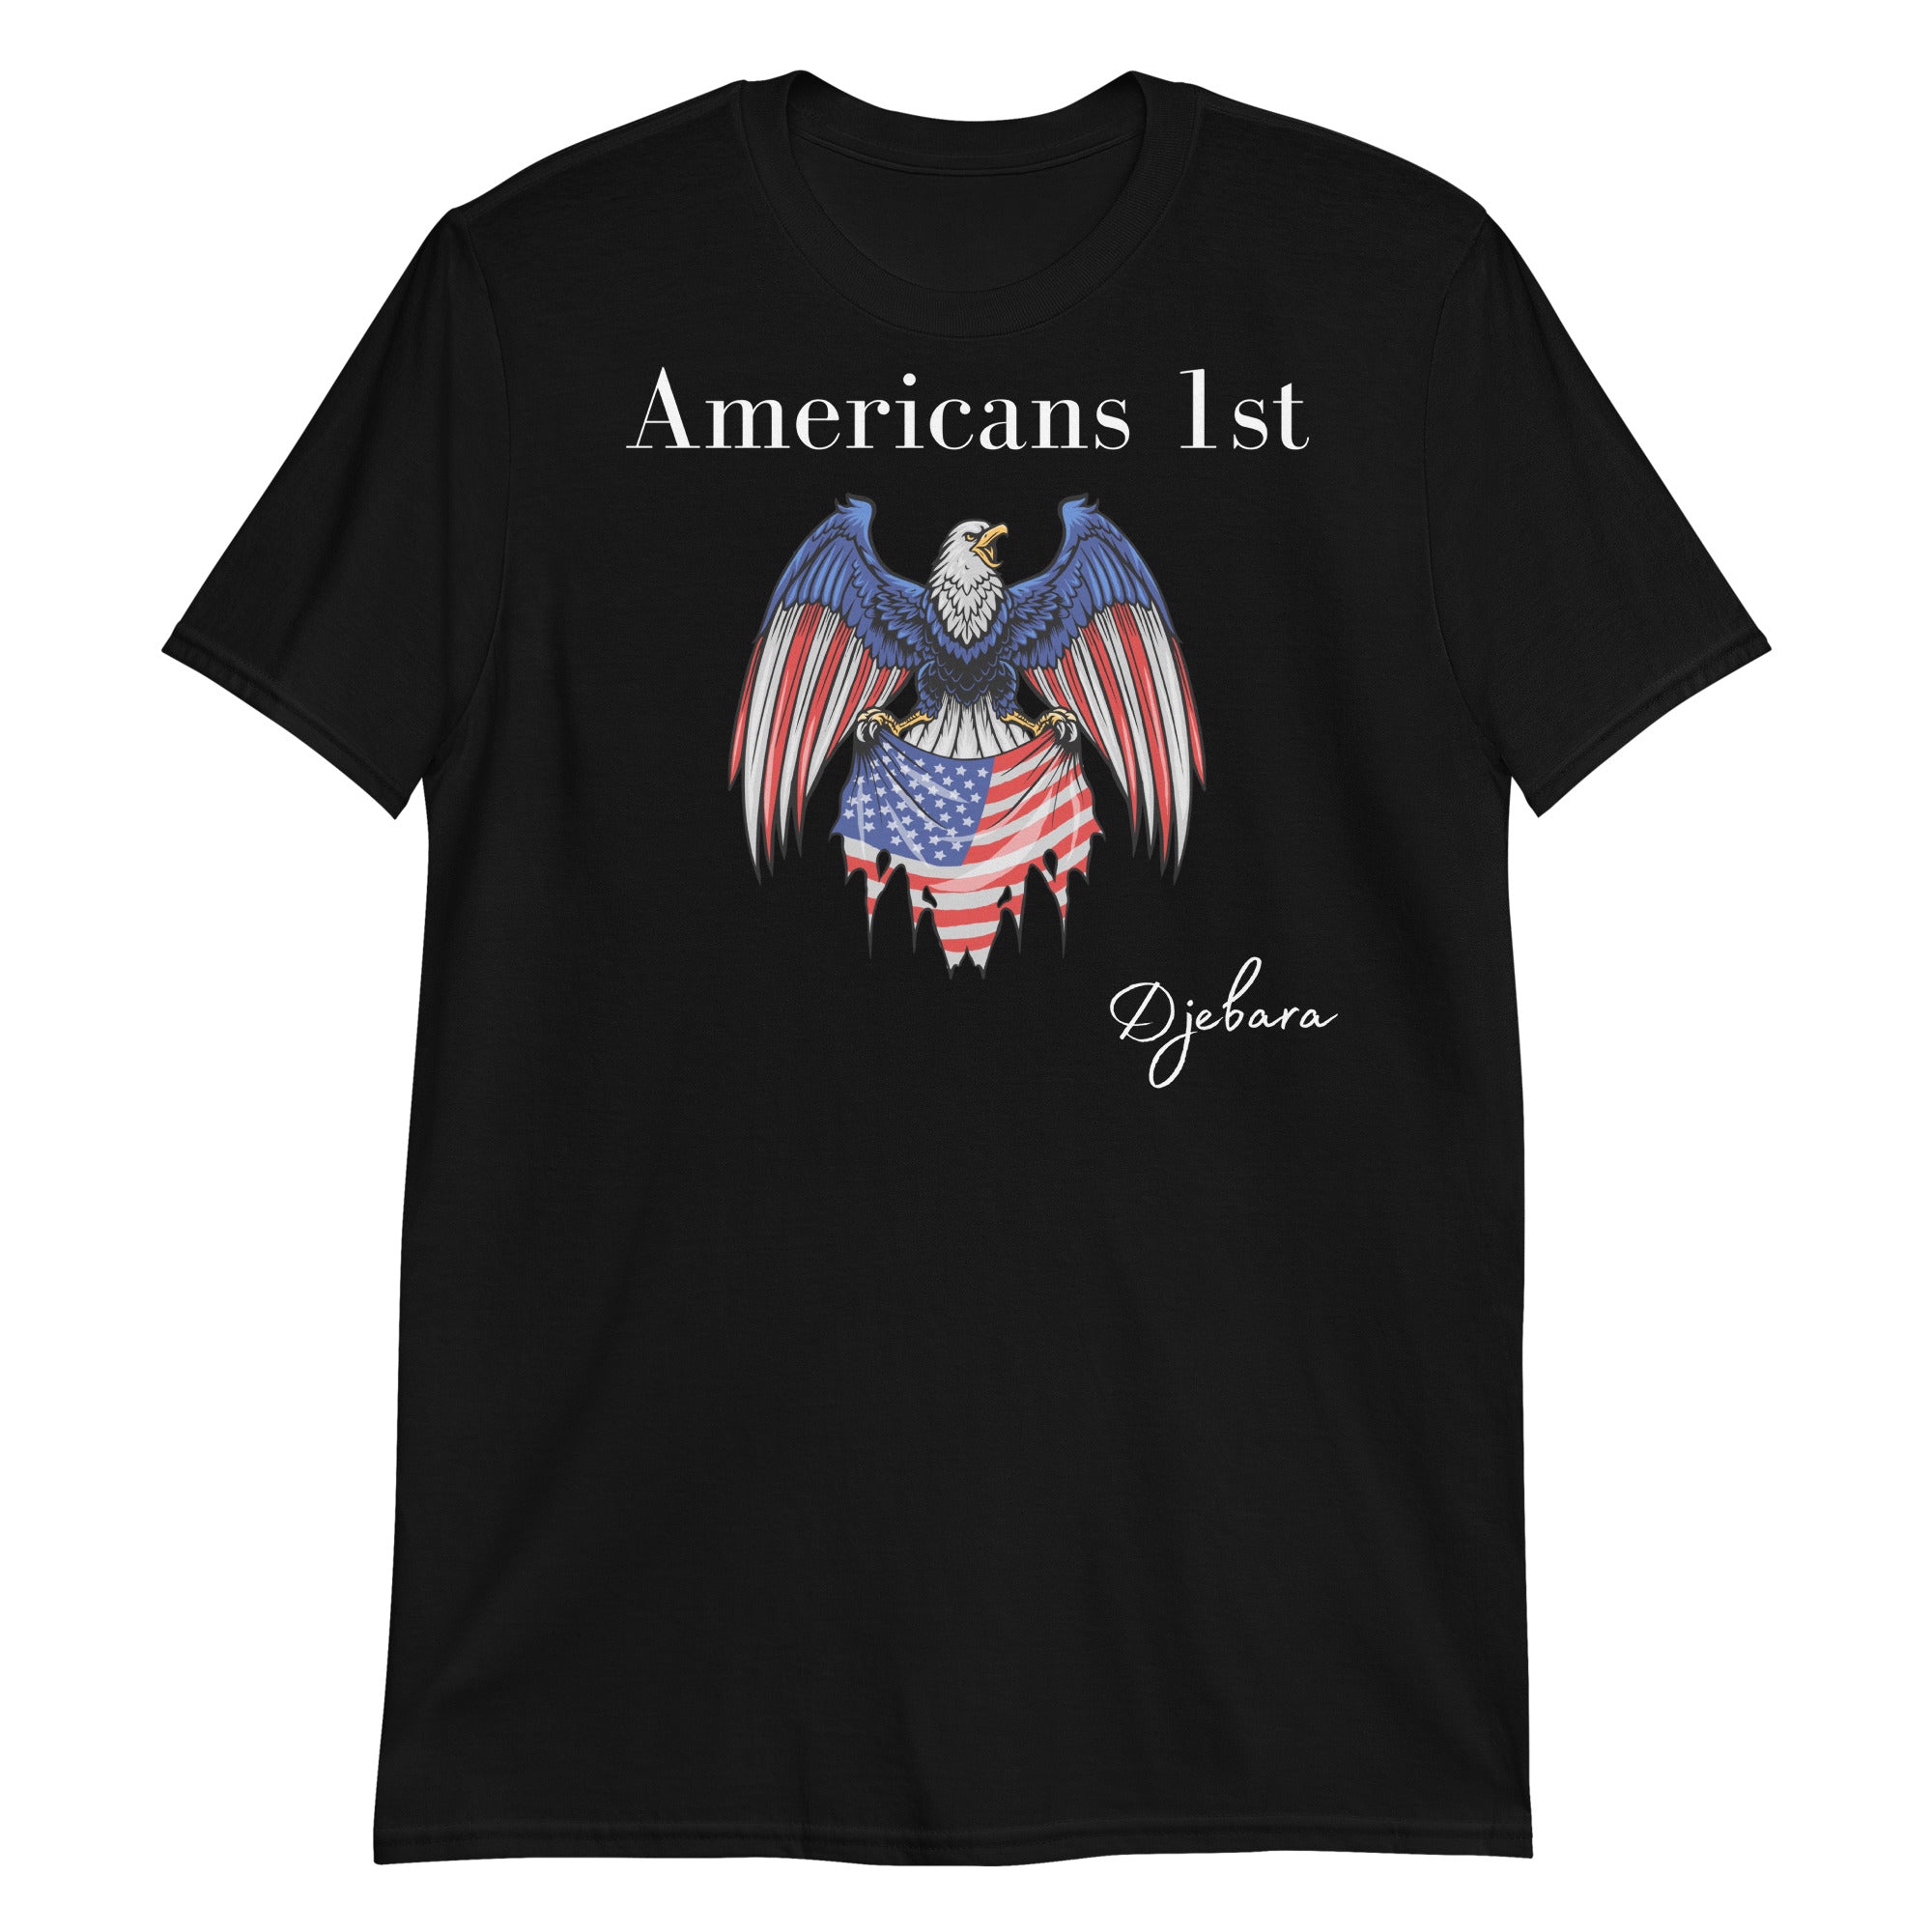 Americans 1st Short-Sleeve Gildan Unisex T-Shirt (Eagle1) S-3XL